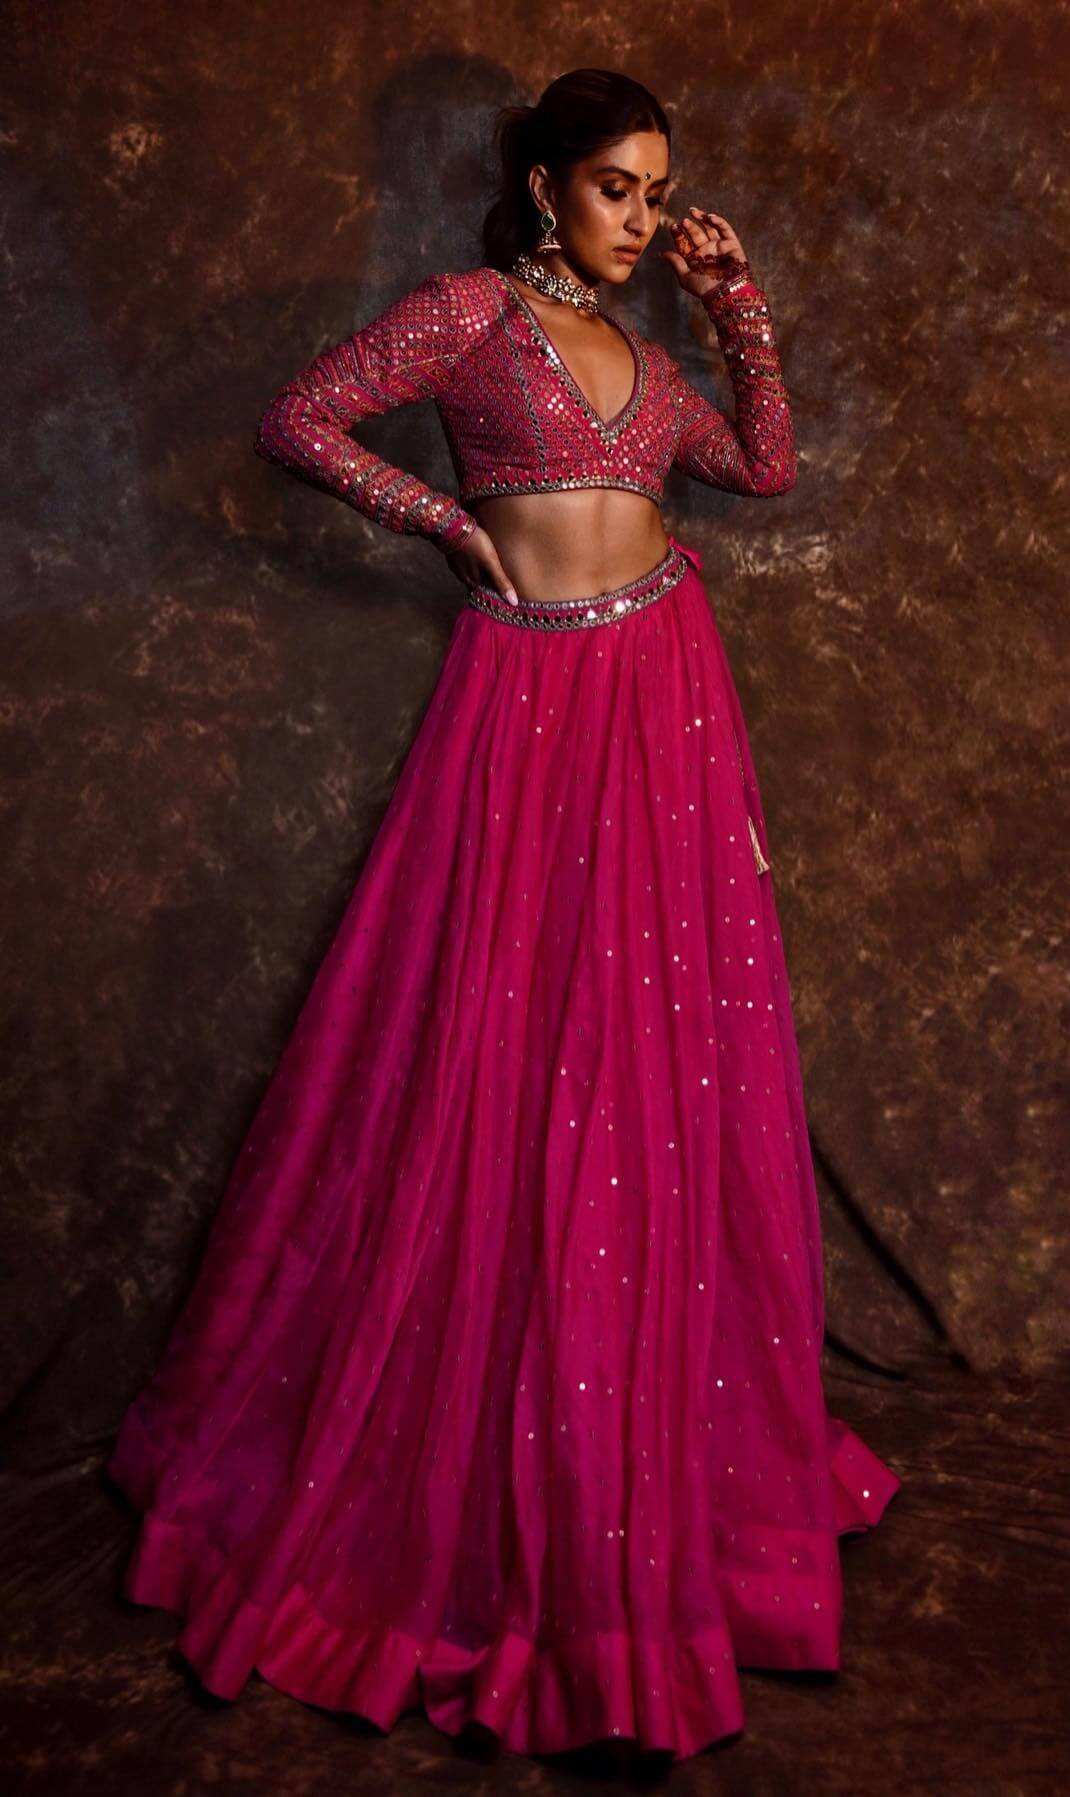 Pranutan Bahl Stunning Look In Hot Pink Mirror Work Lehenga Set